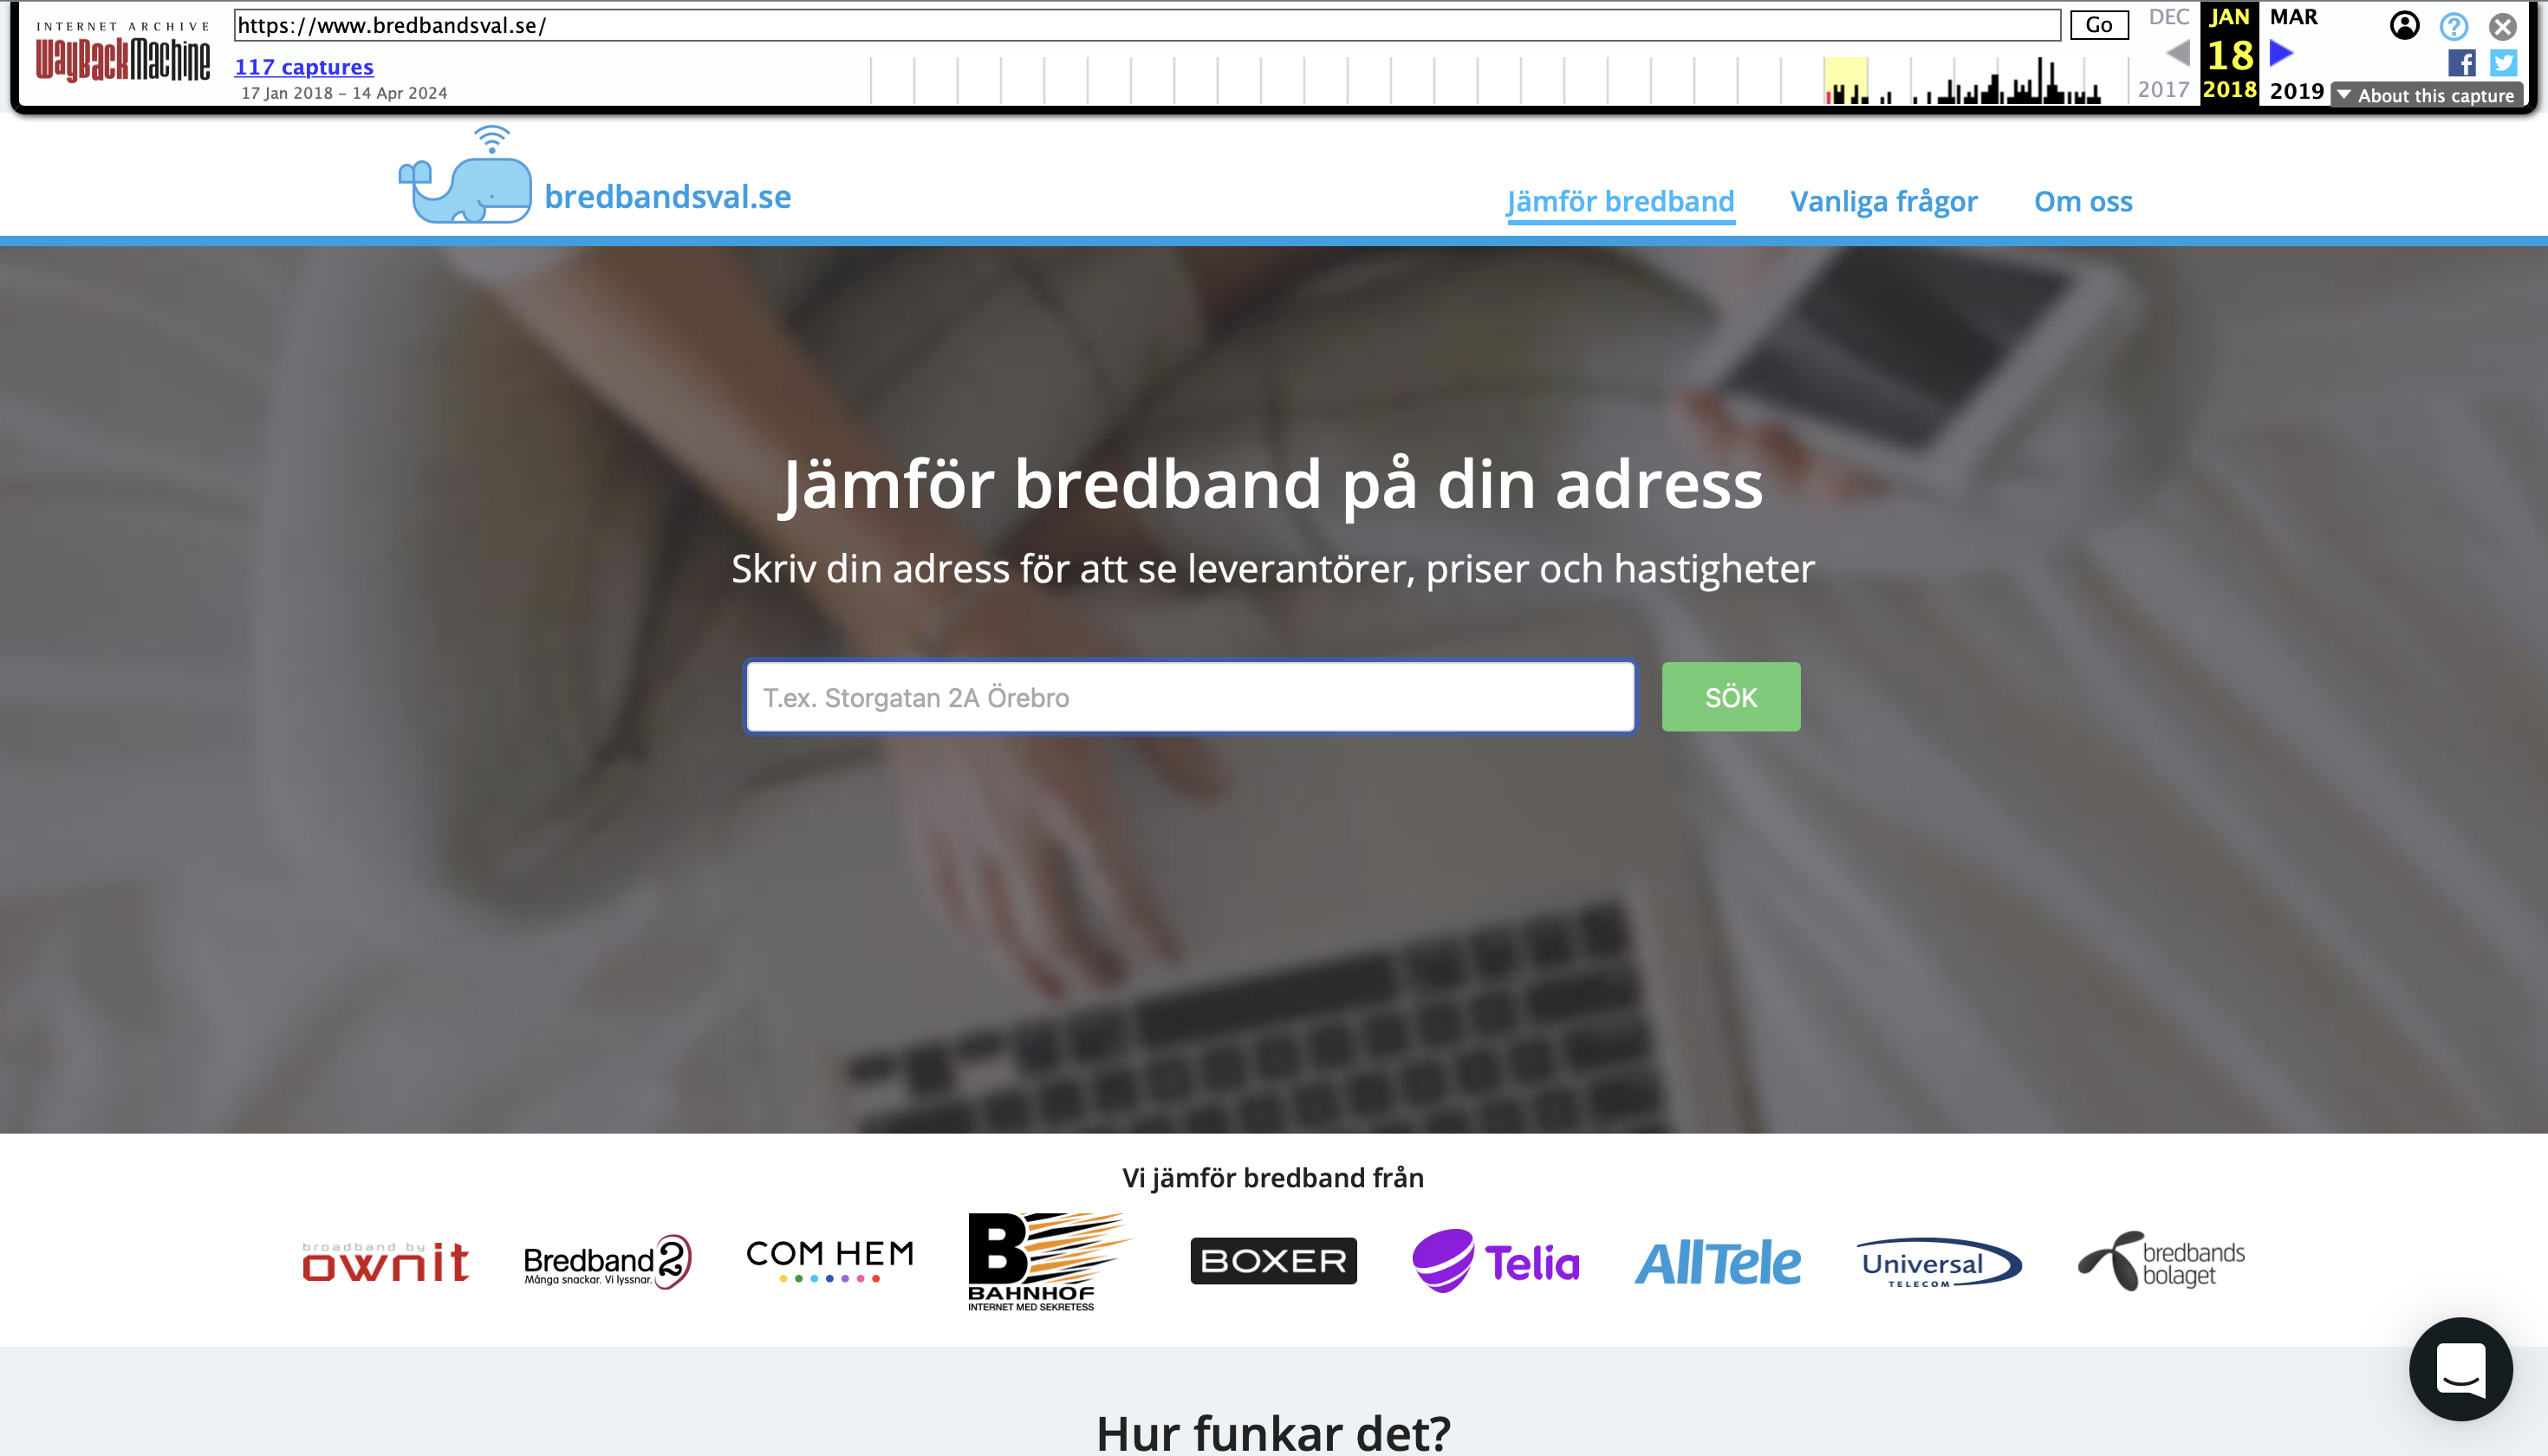 Bredbandsval.se 18 januari 2018